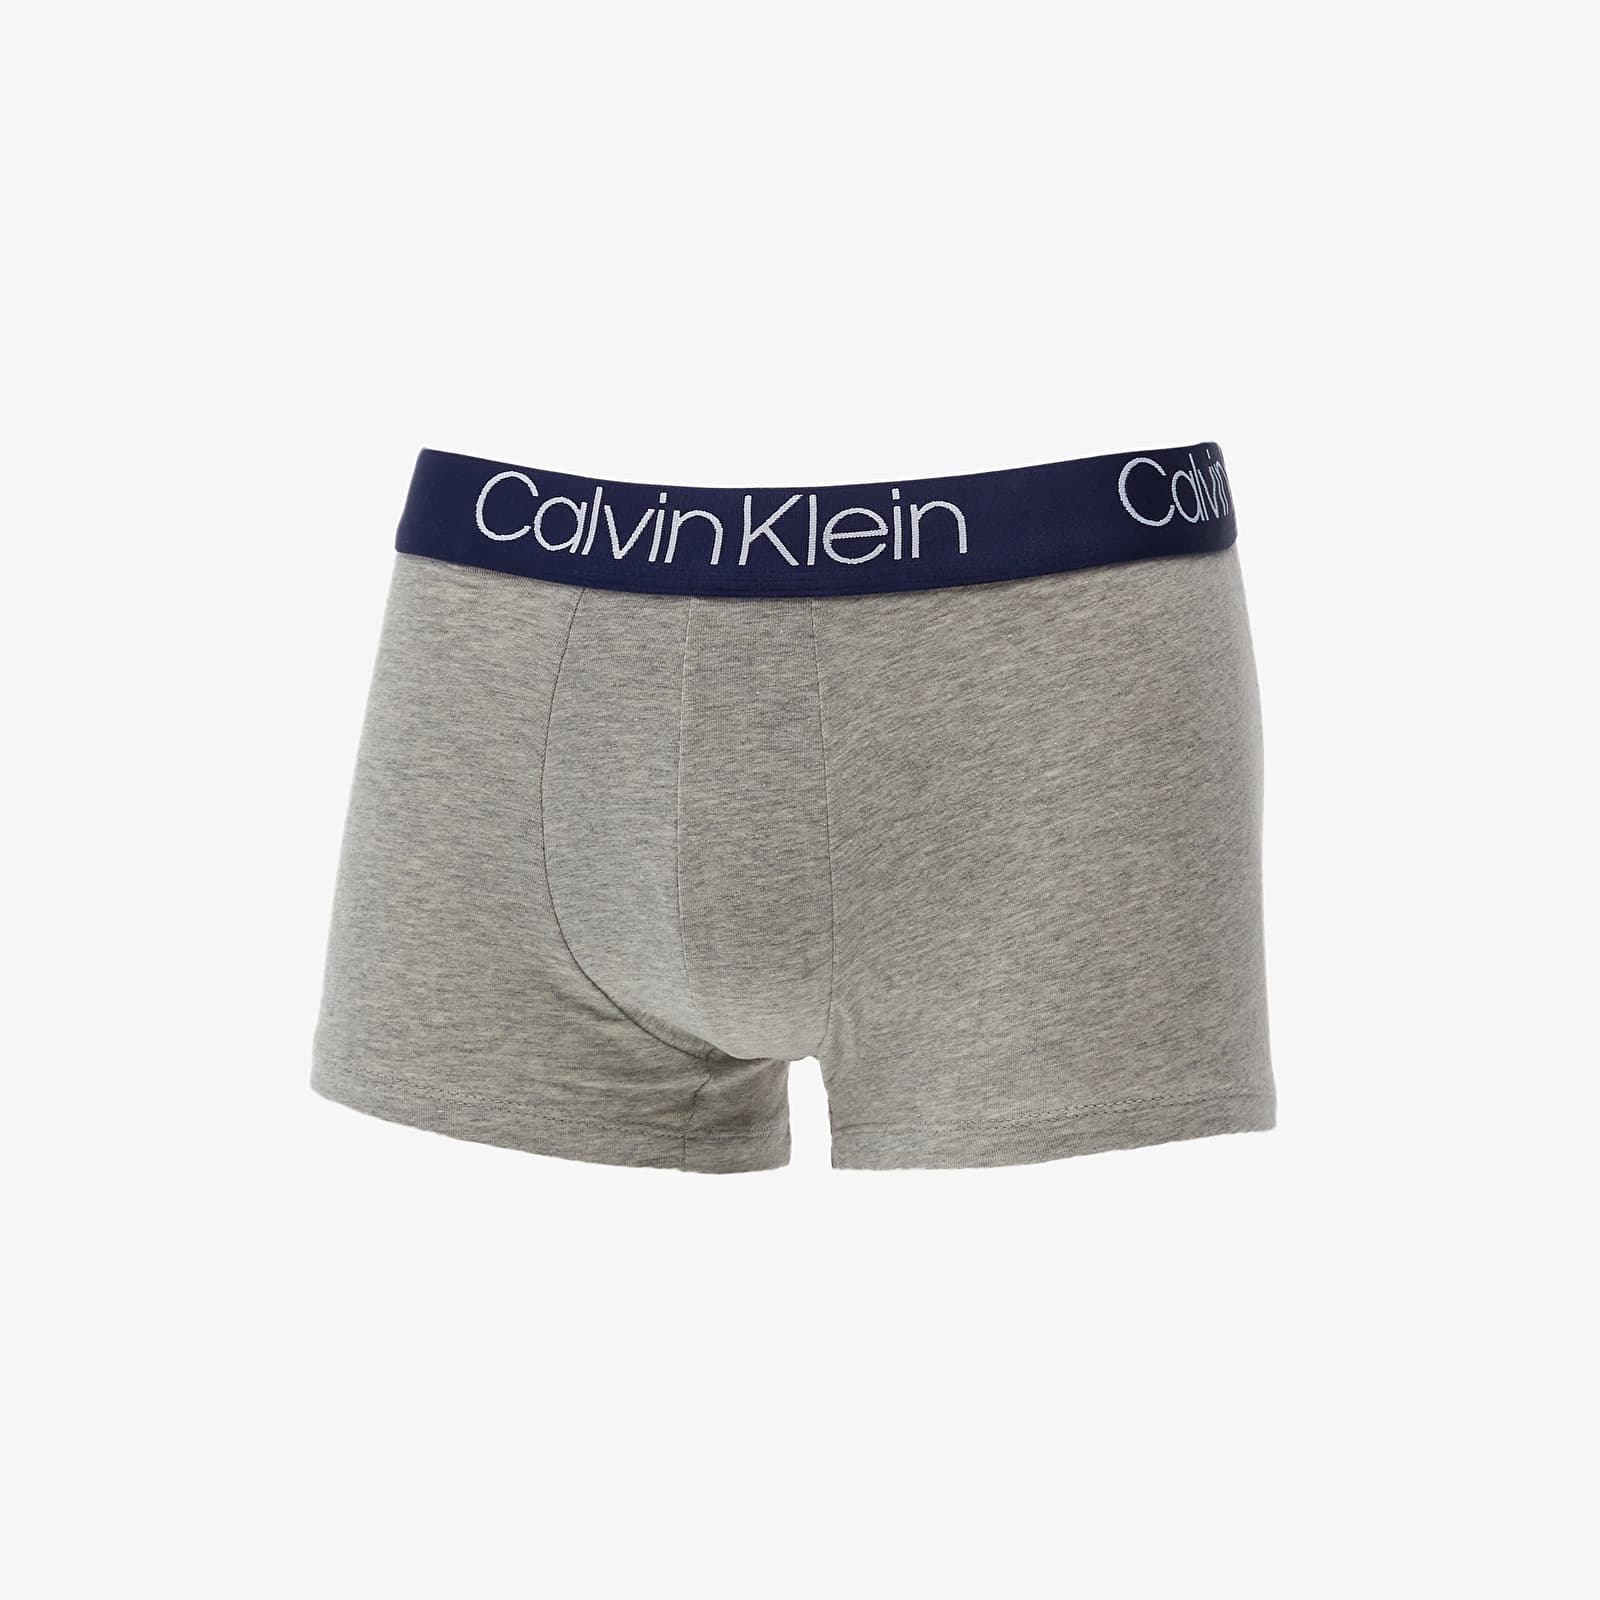 Men's underwear Calvin Klein 2 Pack Trunk Multicolor